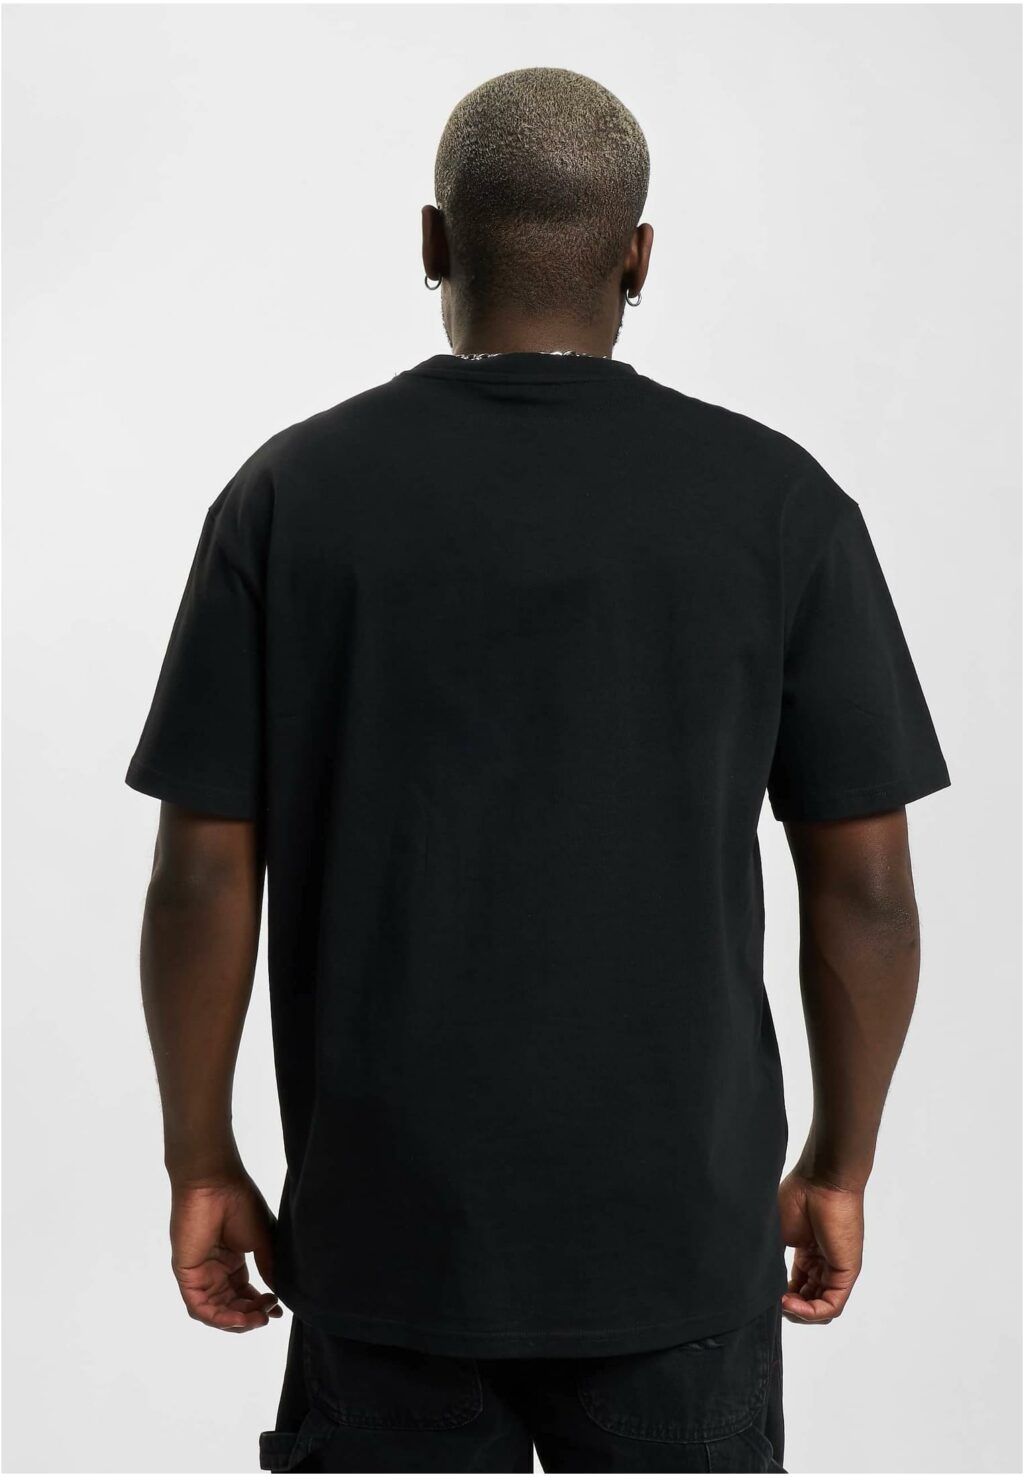 Rocawear T-Shirt black/lime RWTS024T